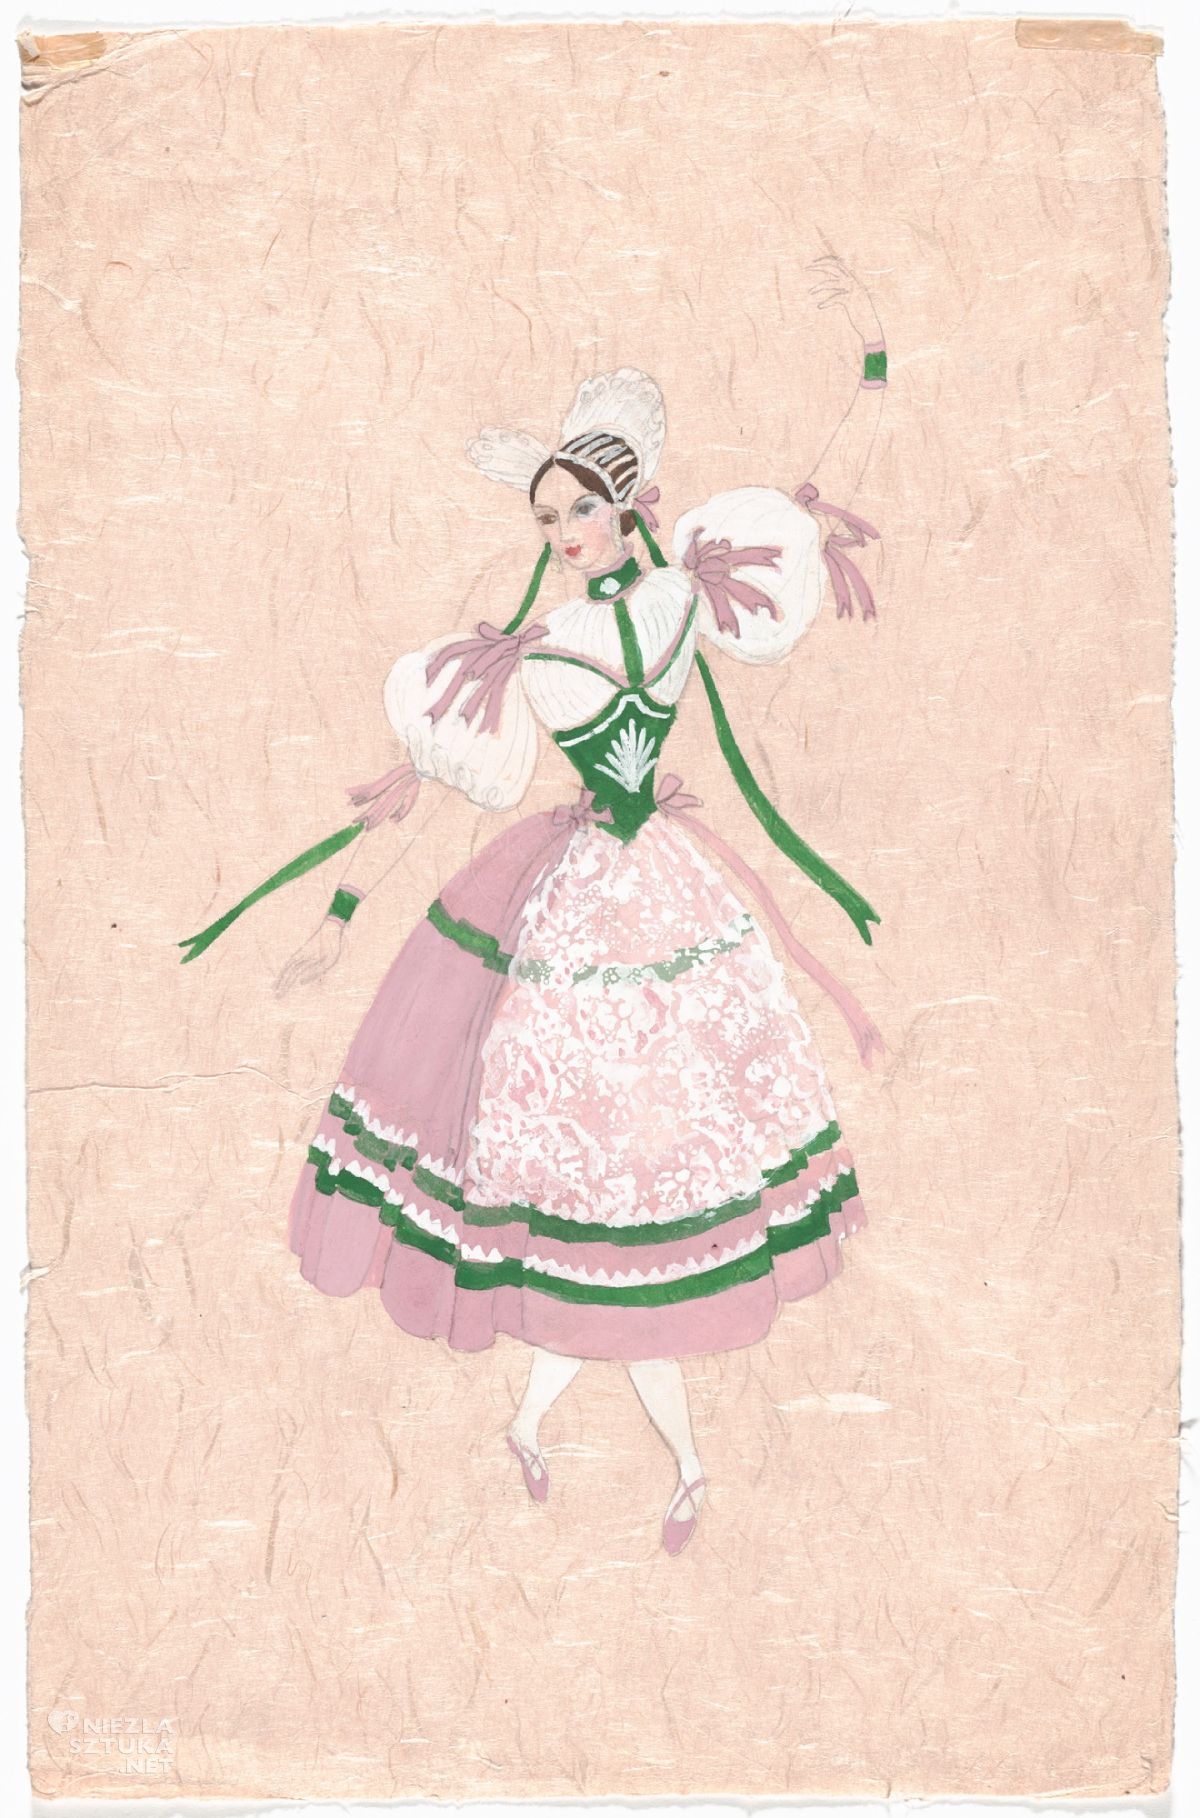 Alicja Halicka, projekt kostiumów, Le Baiser de la Fée, balet, kostiumy, kobiety w sztuce, rysunek, akwarela, niezła sztuka